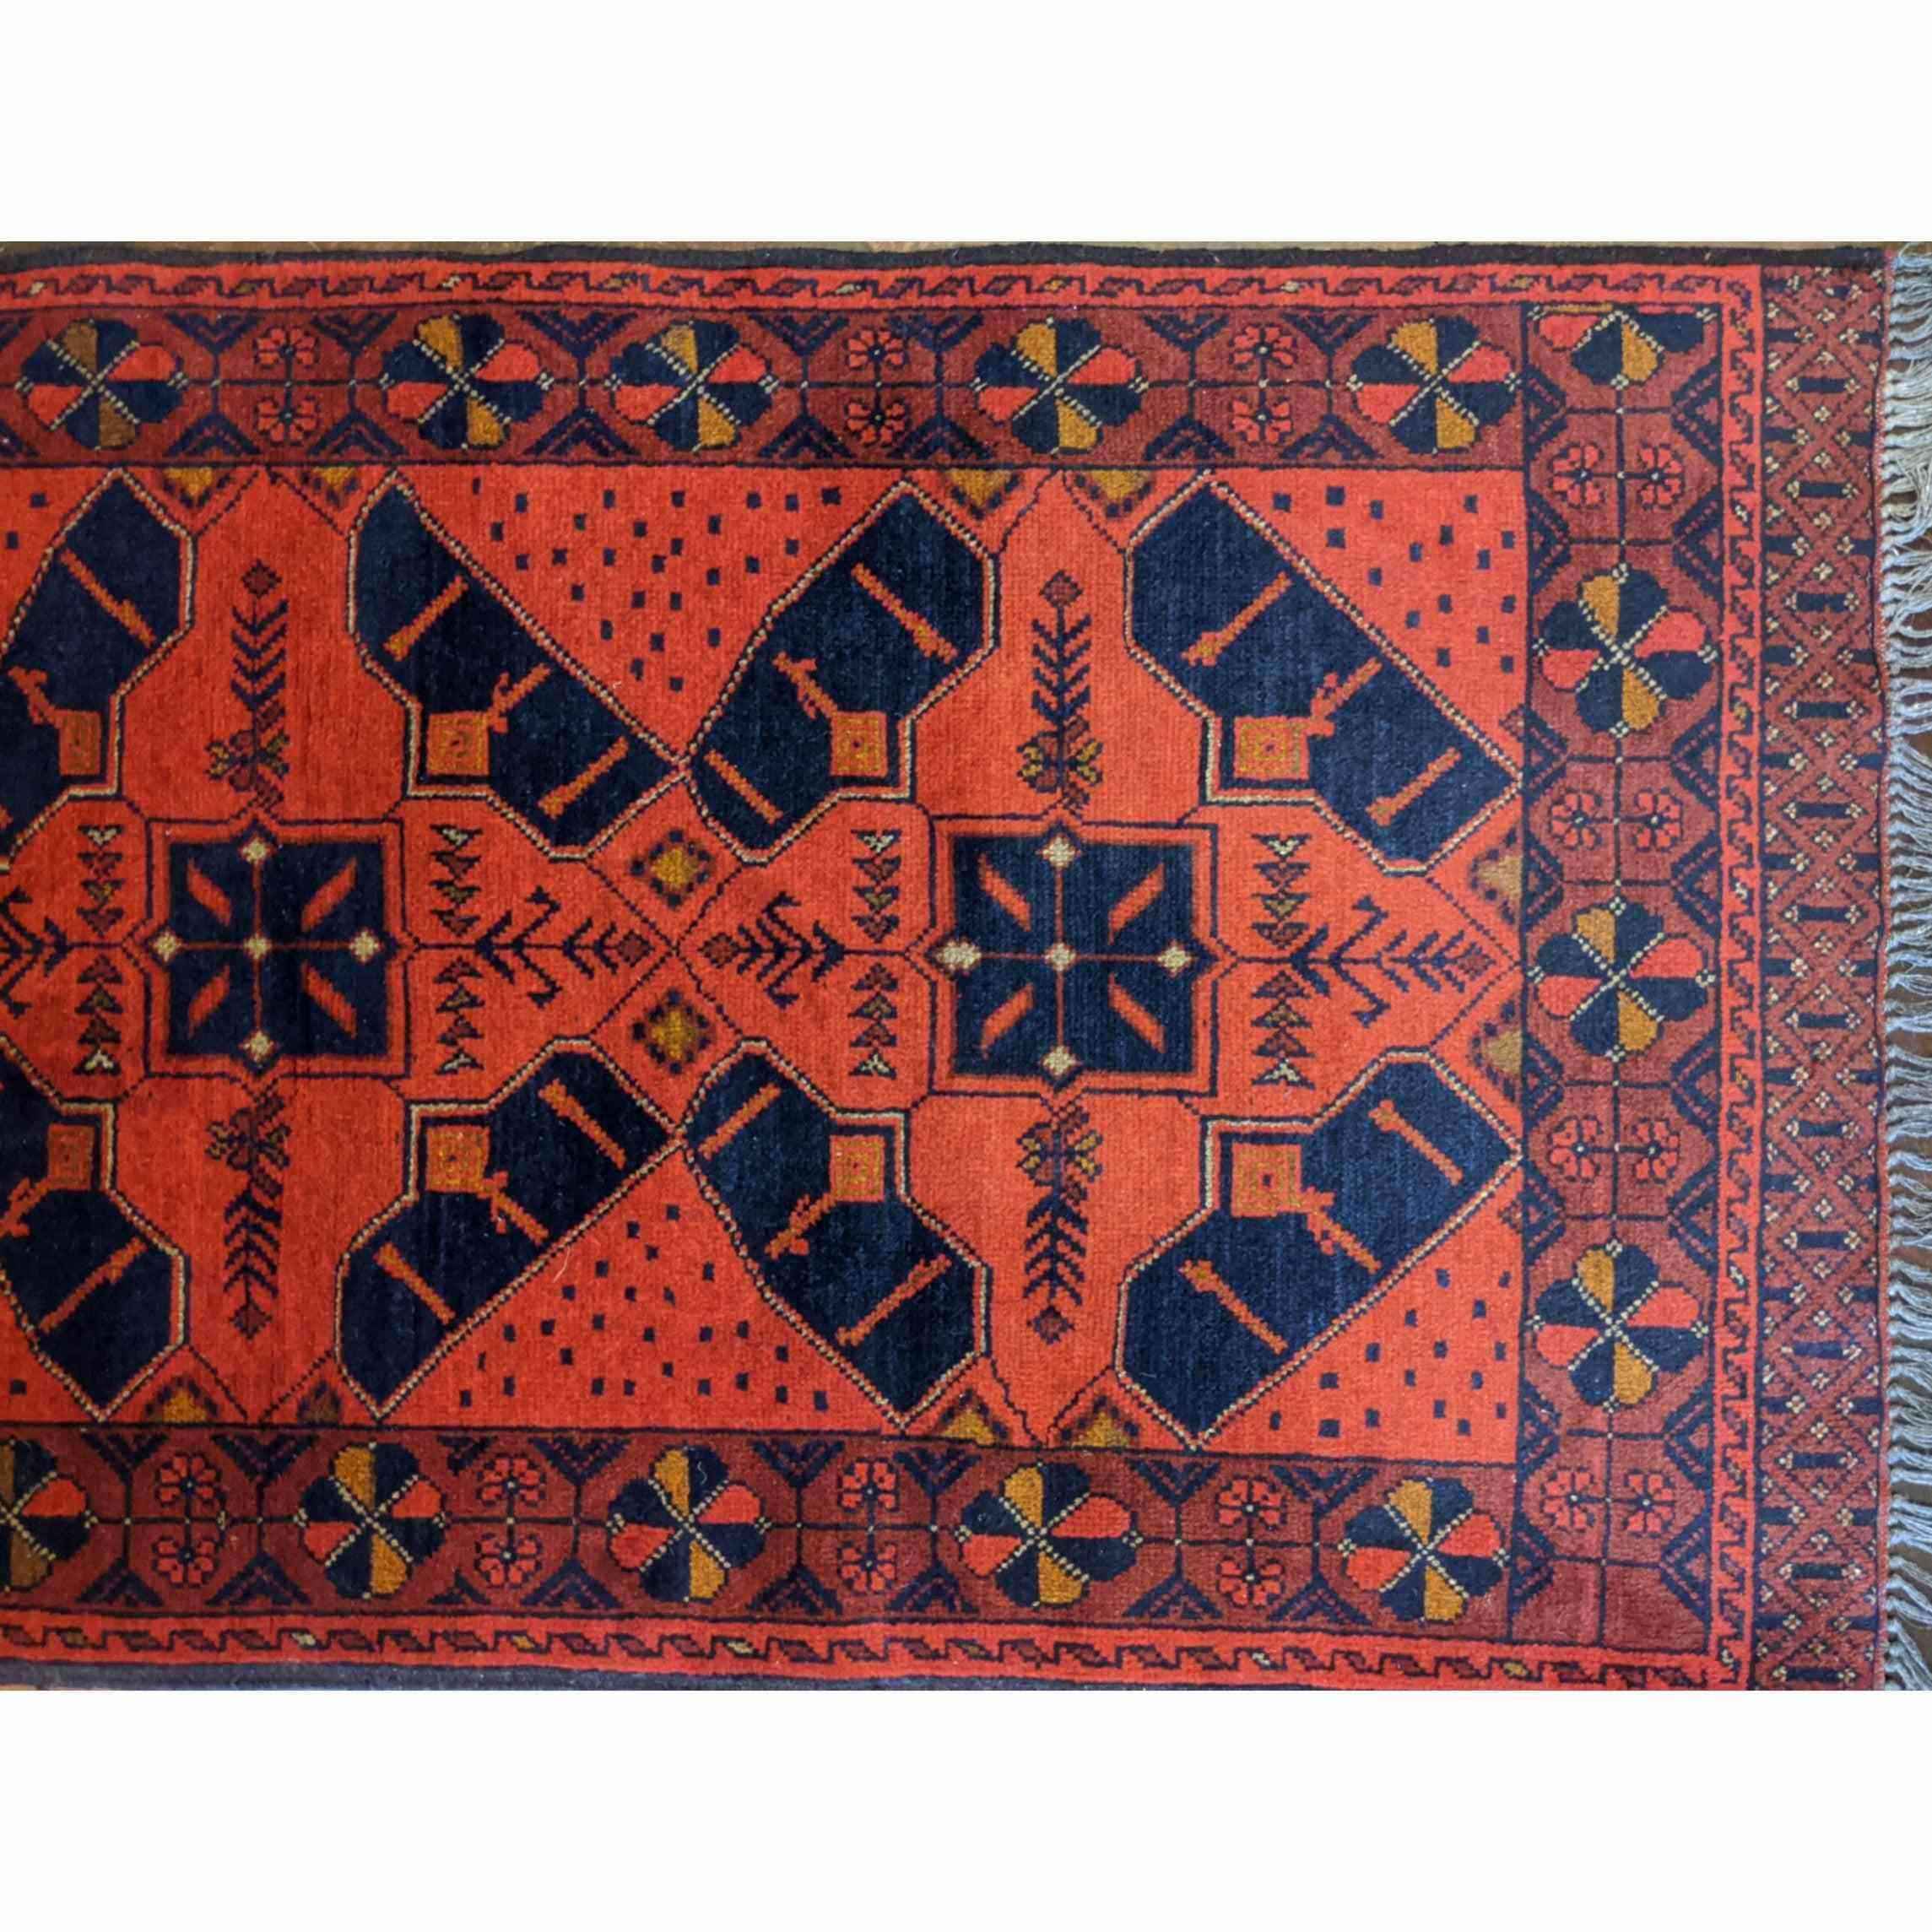 120 x 80 cm Afghan Khan Tribal Black Small Rug - Rugmaster